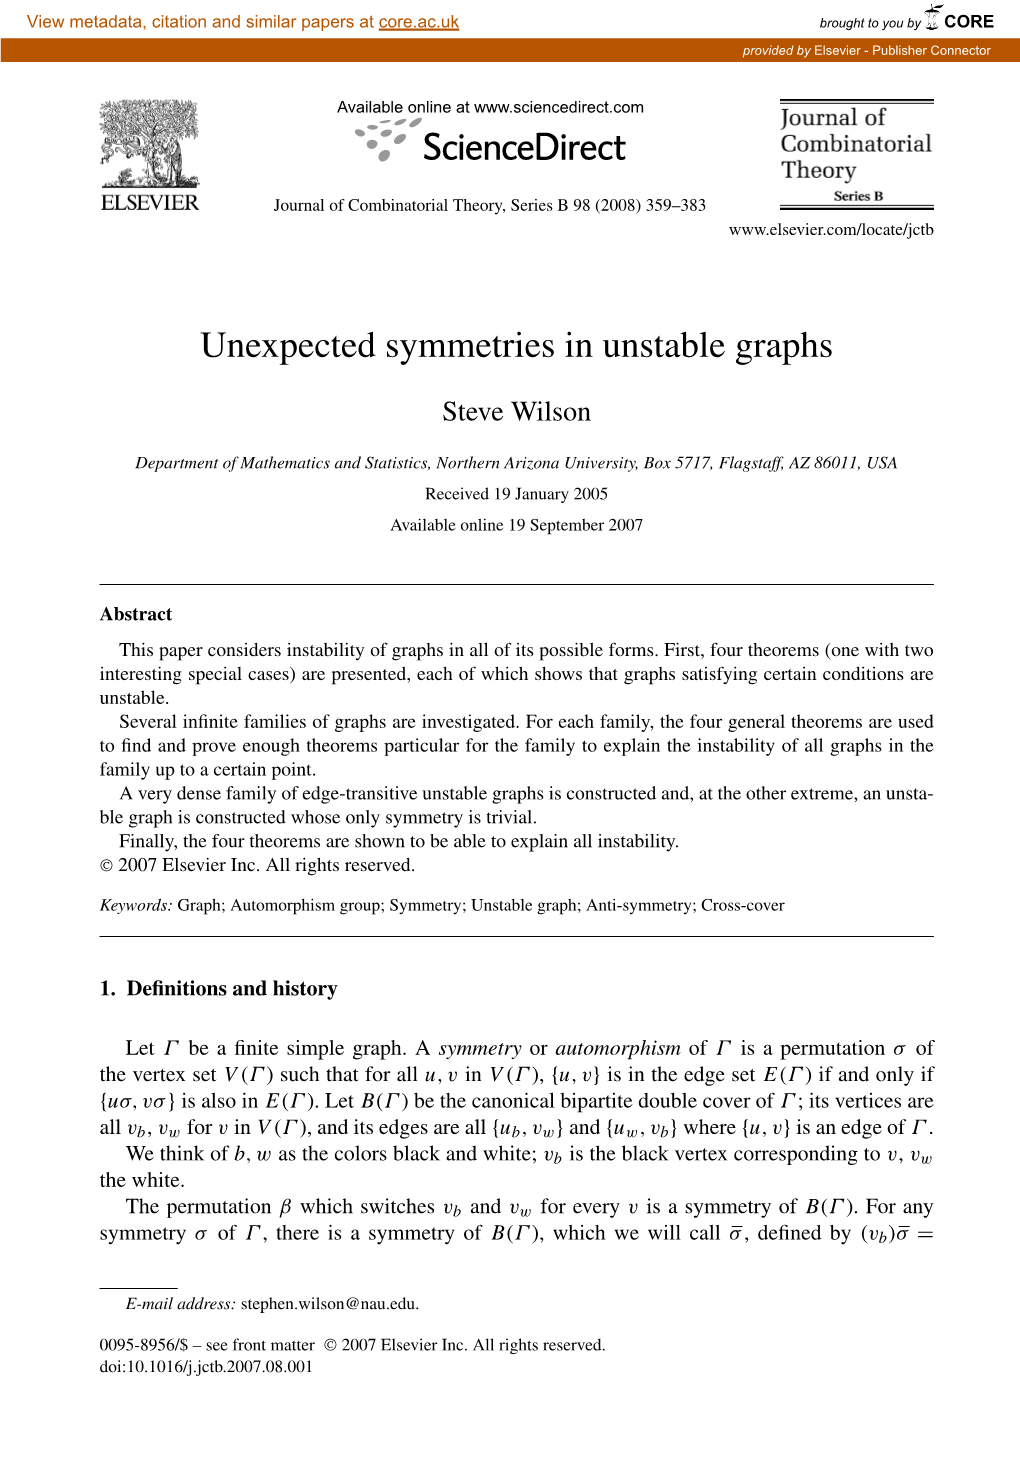 Unexpected Symmetries in Unstable Graphs